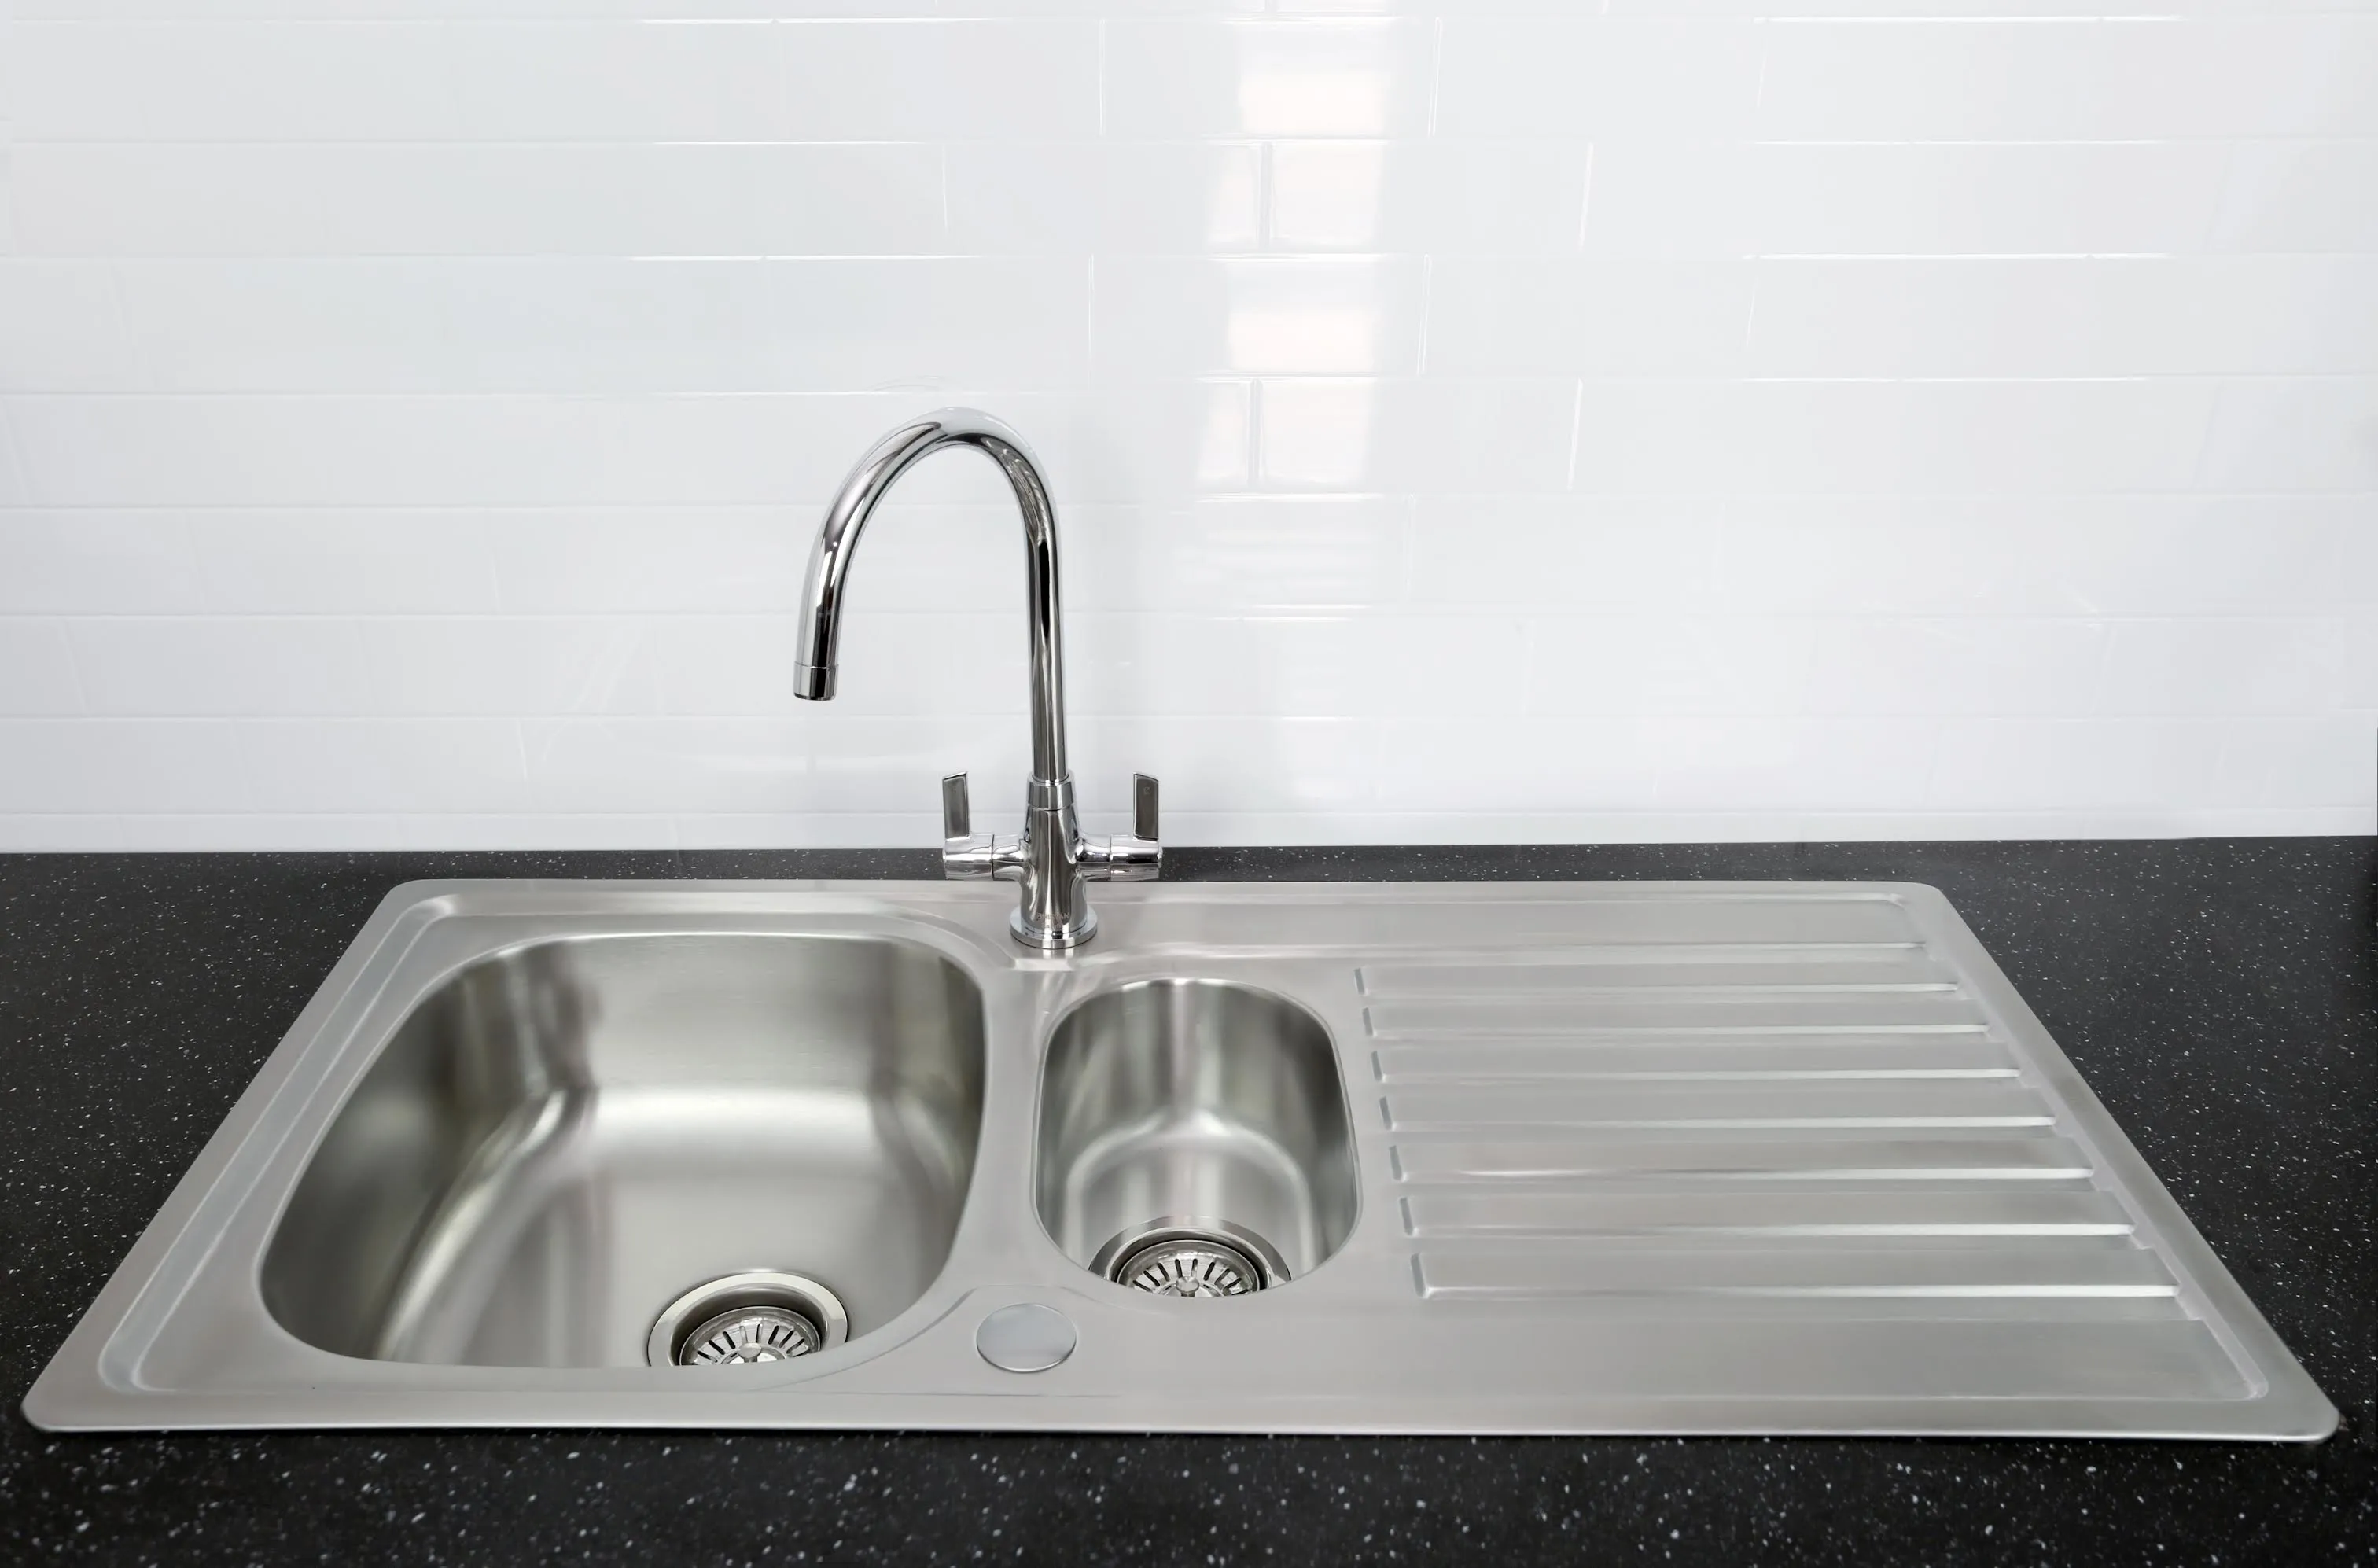 Bristan Inox Kitchen Sink 1.5 Bowl & Echo Easyfit Kitchen Mixer Tap Chrome